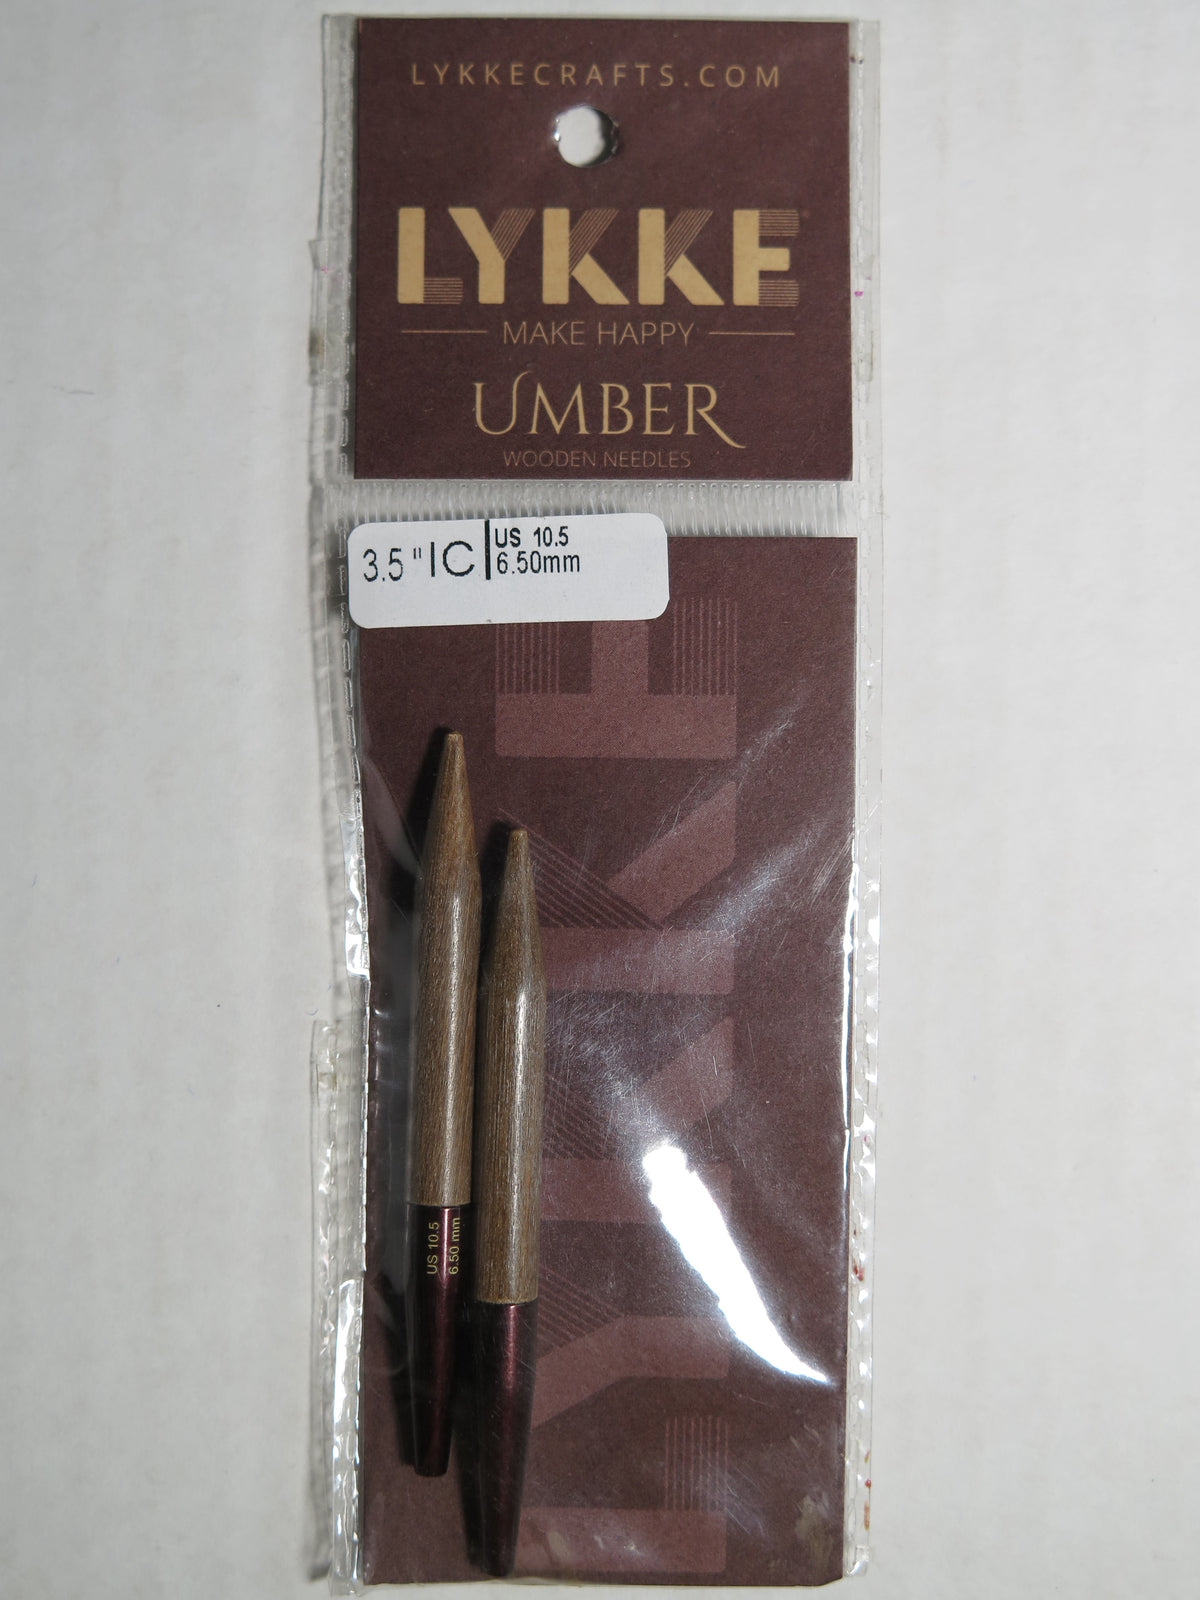 Lykke Umber 3.5in Interchangeable Needle Tips - US10.5 6.50mm